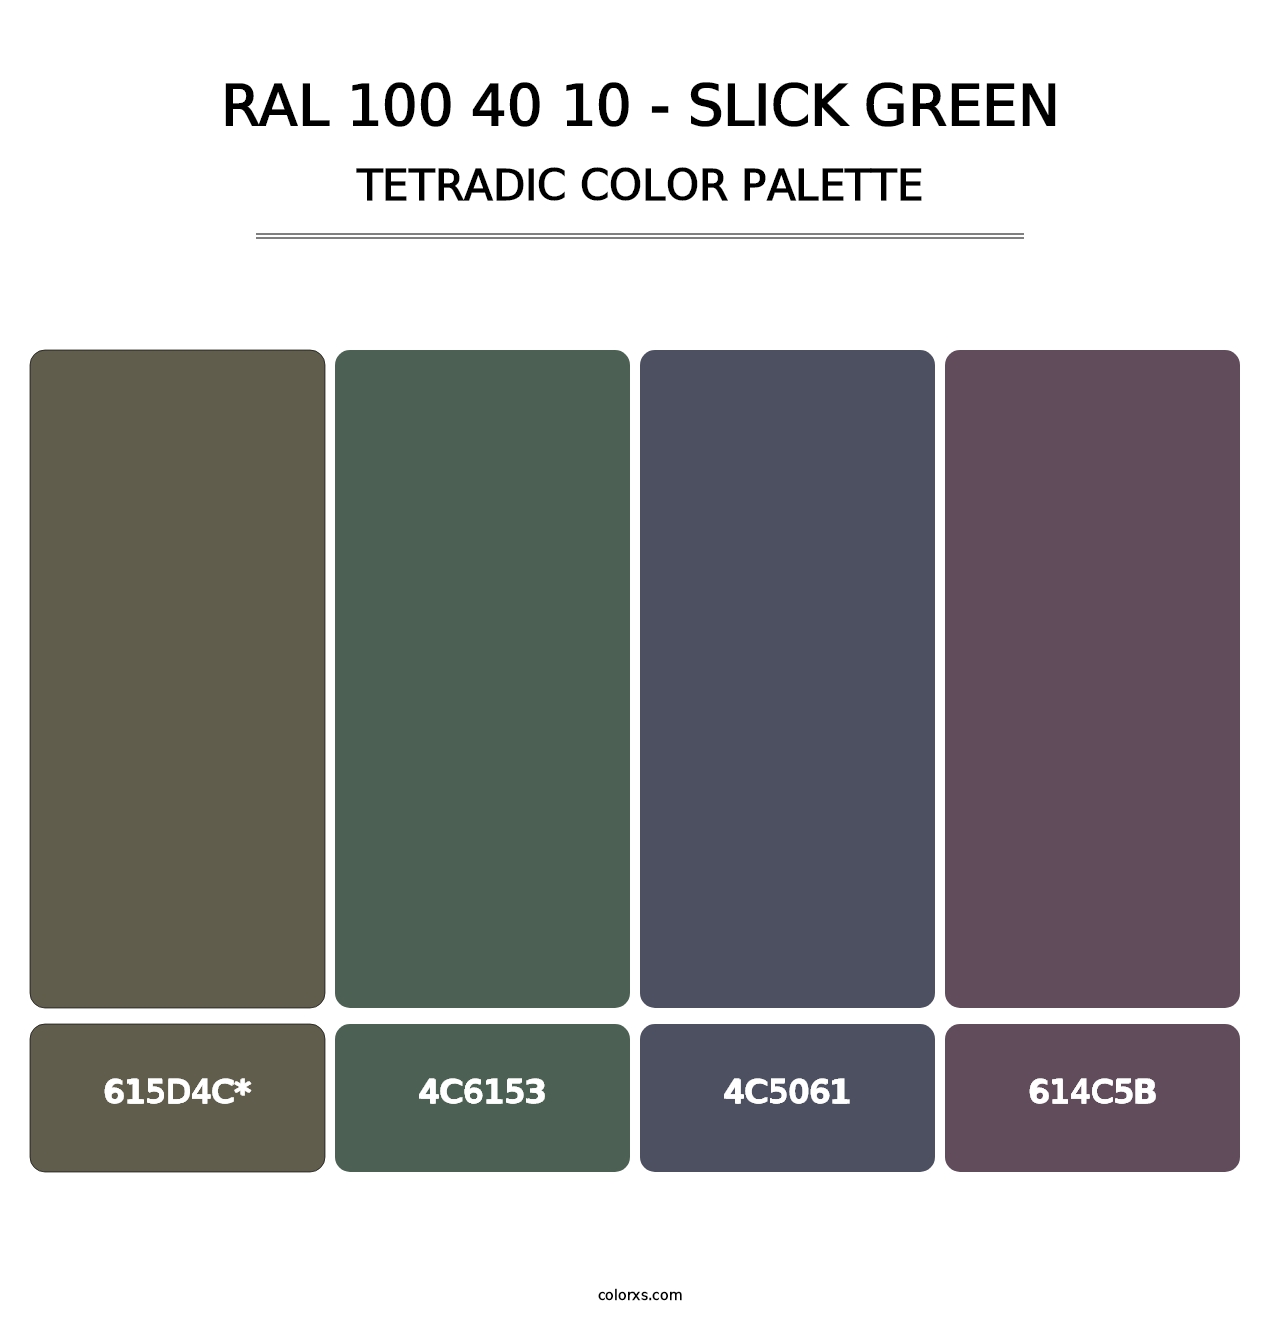 RAL 100 40 10 - Slick Green - Tetradic Color Palette